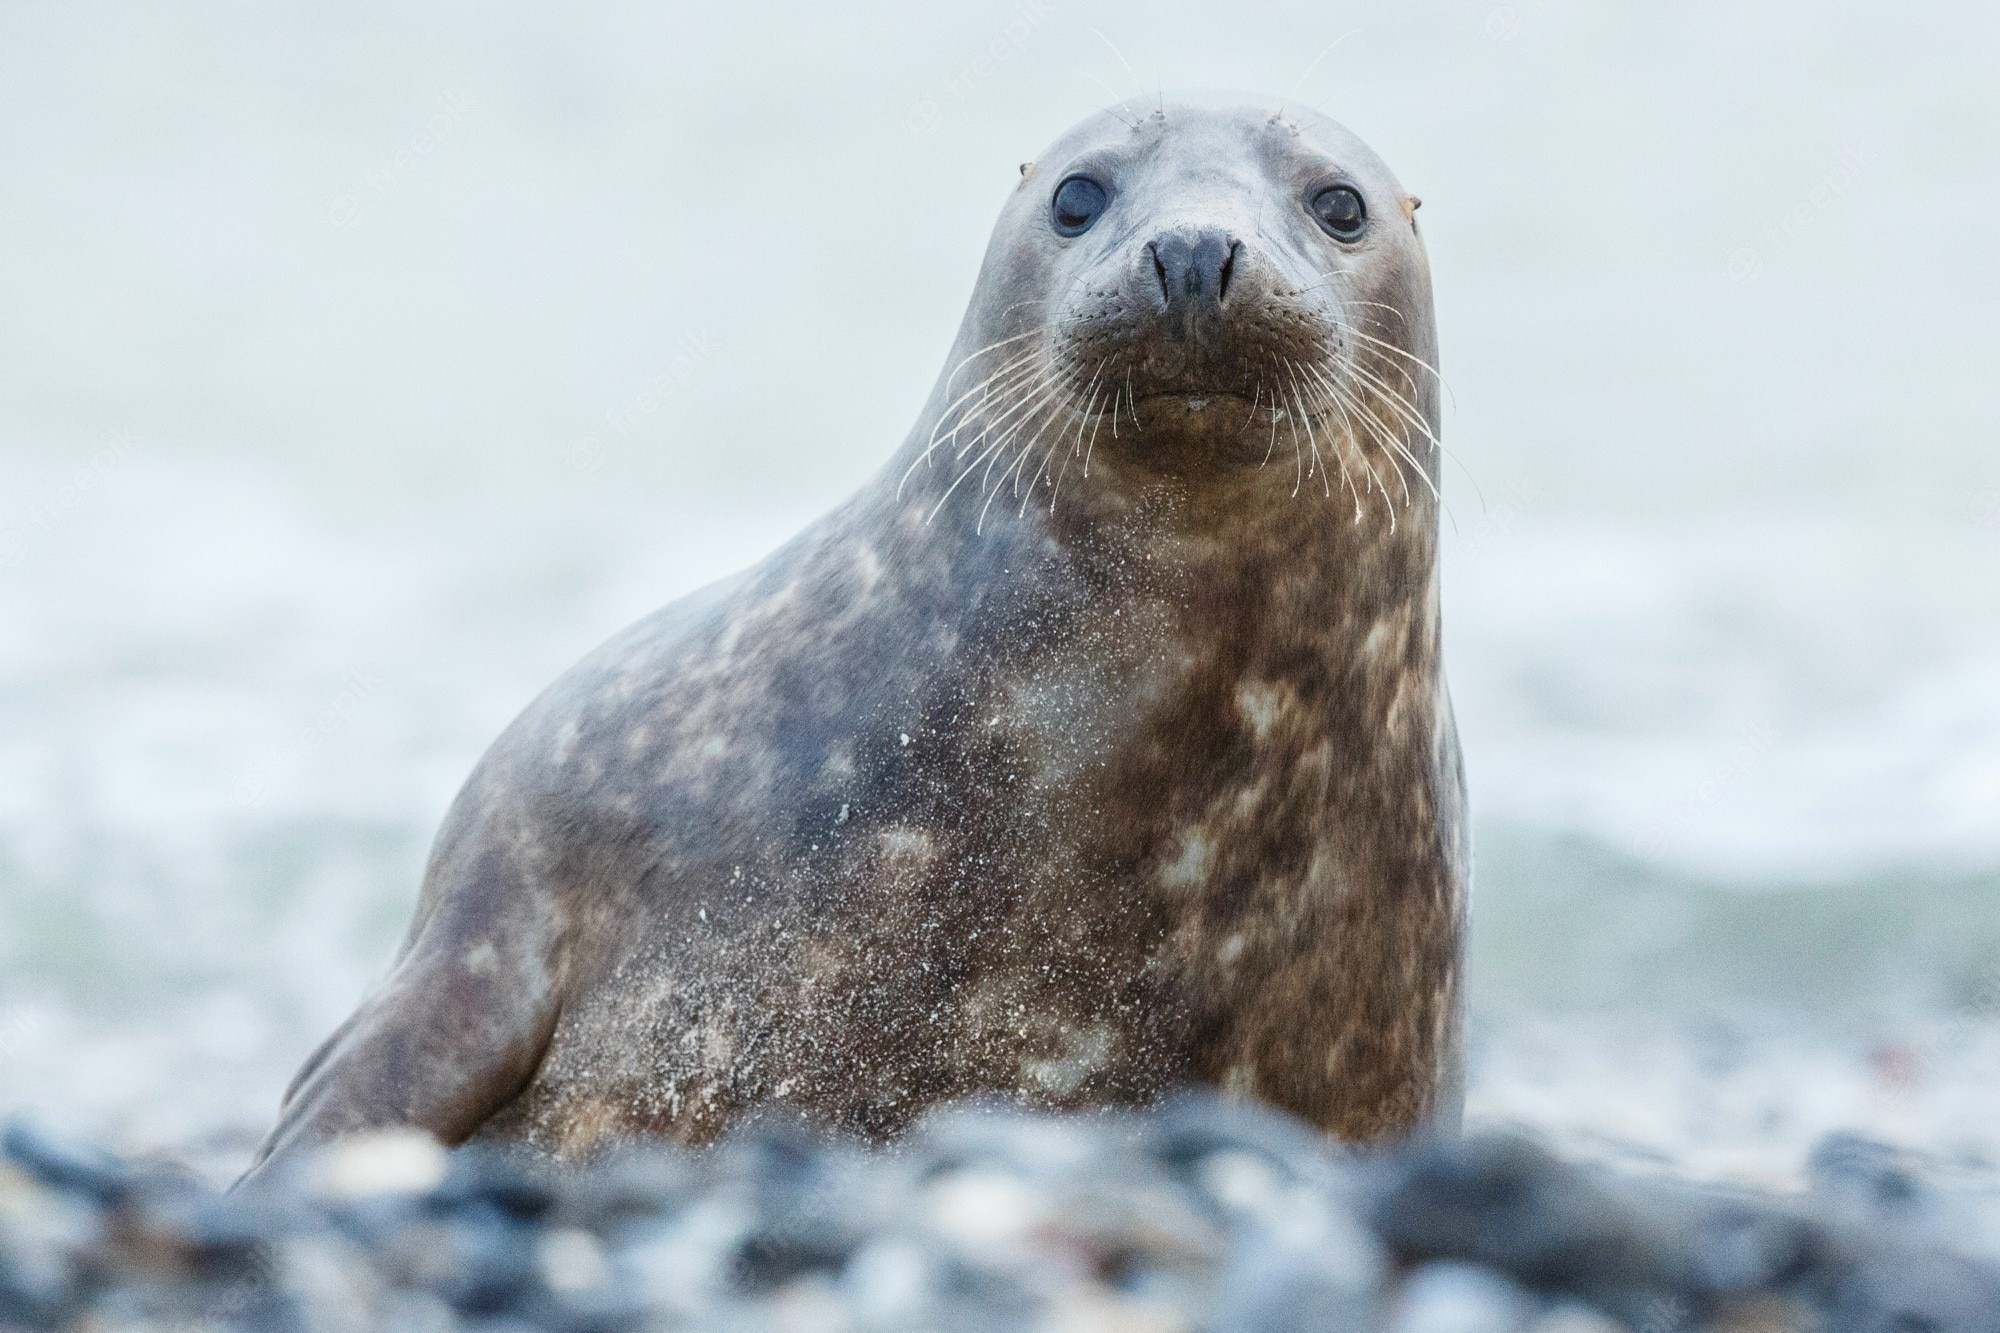 Ocean seal Image. Free Vectors, & PSD